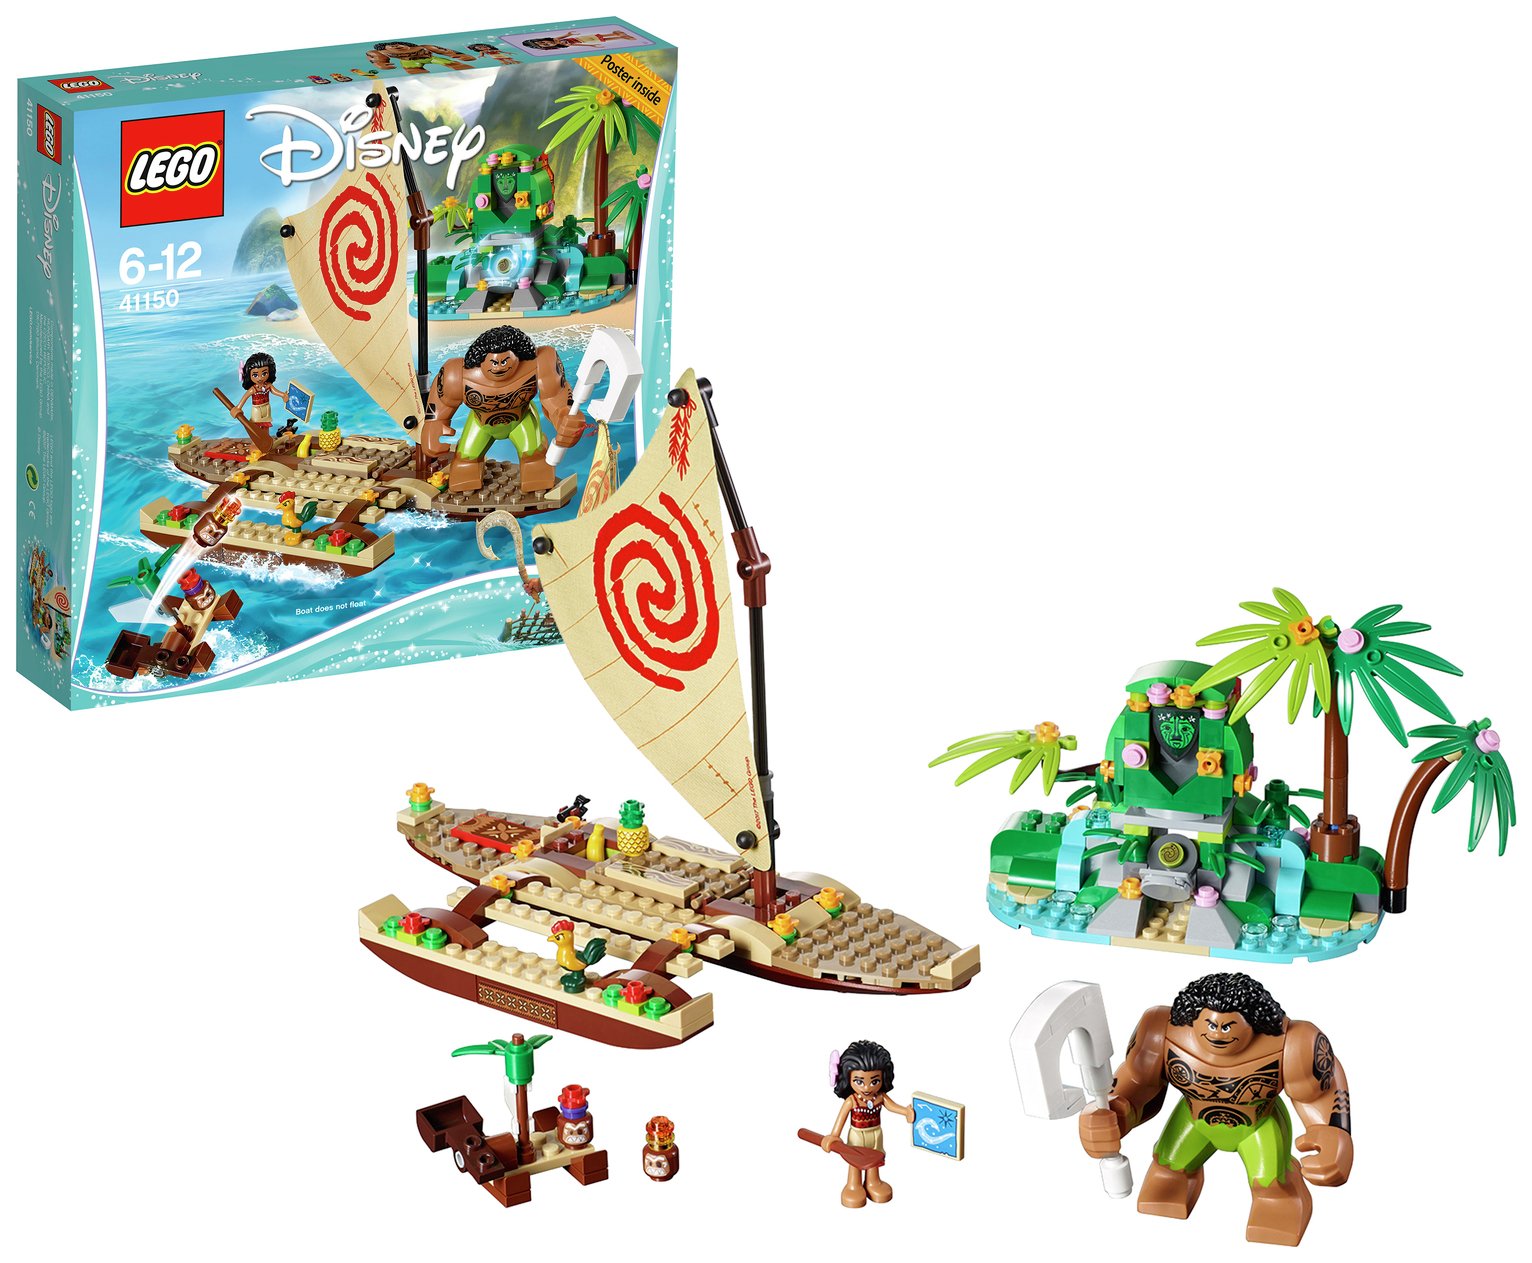 LEGO Moana's Ocean Voyage - 41150